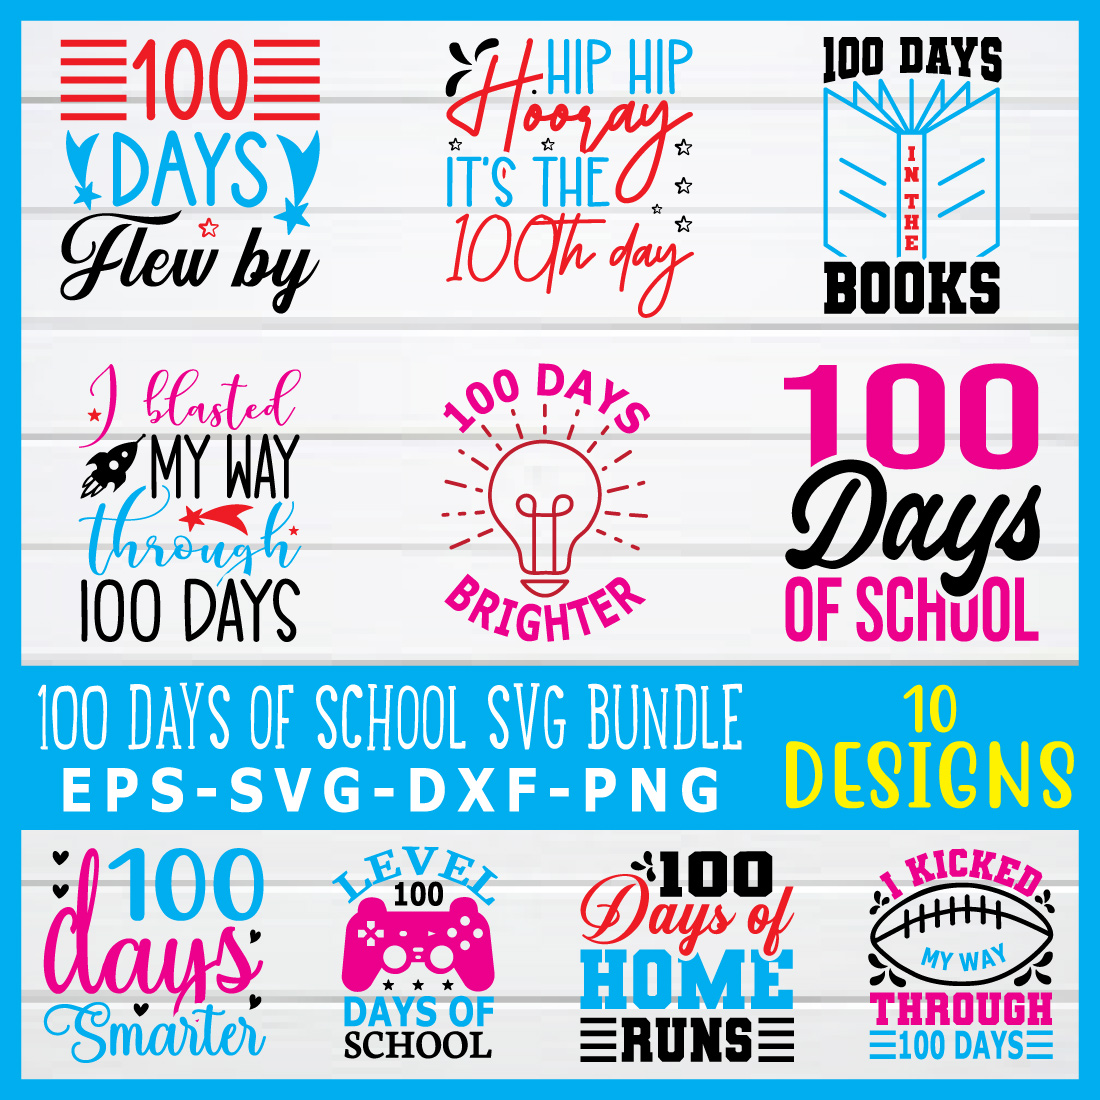 100 days of school svg bundle preview image.